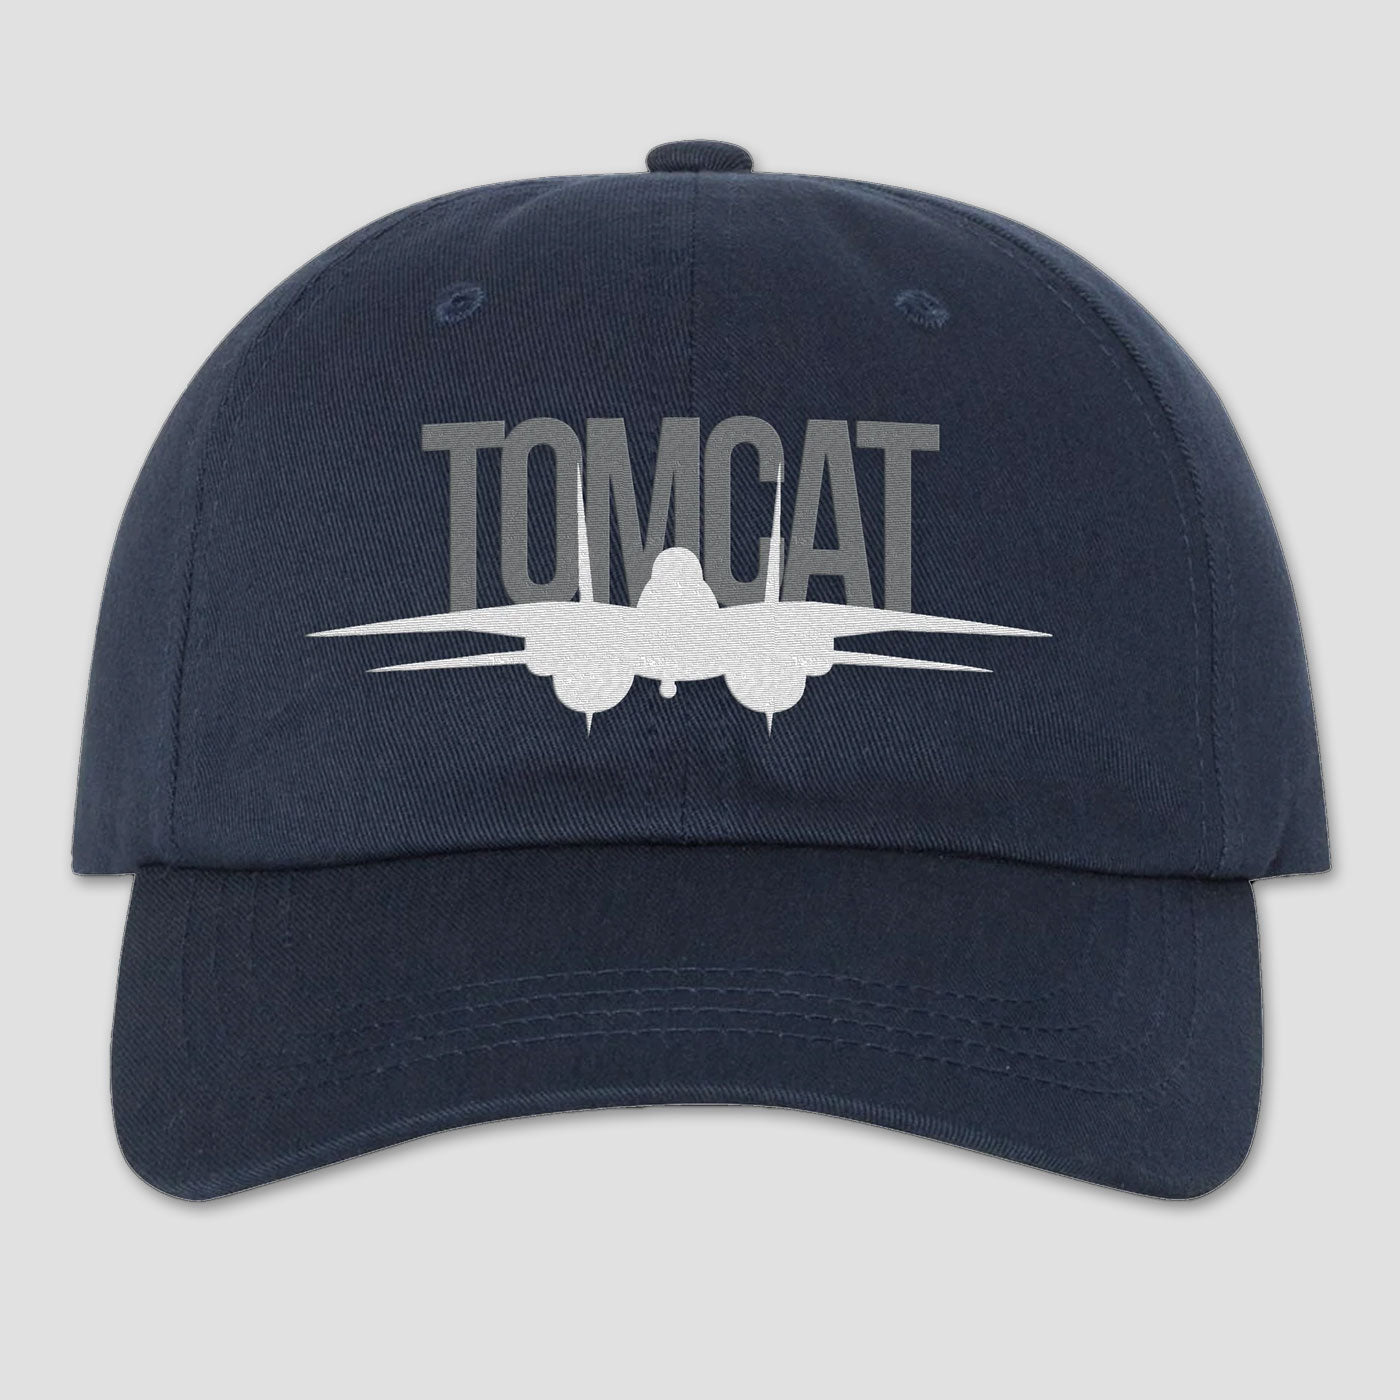 F-14 Tomcat Hats